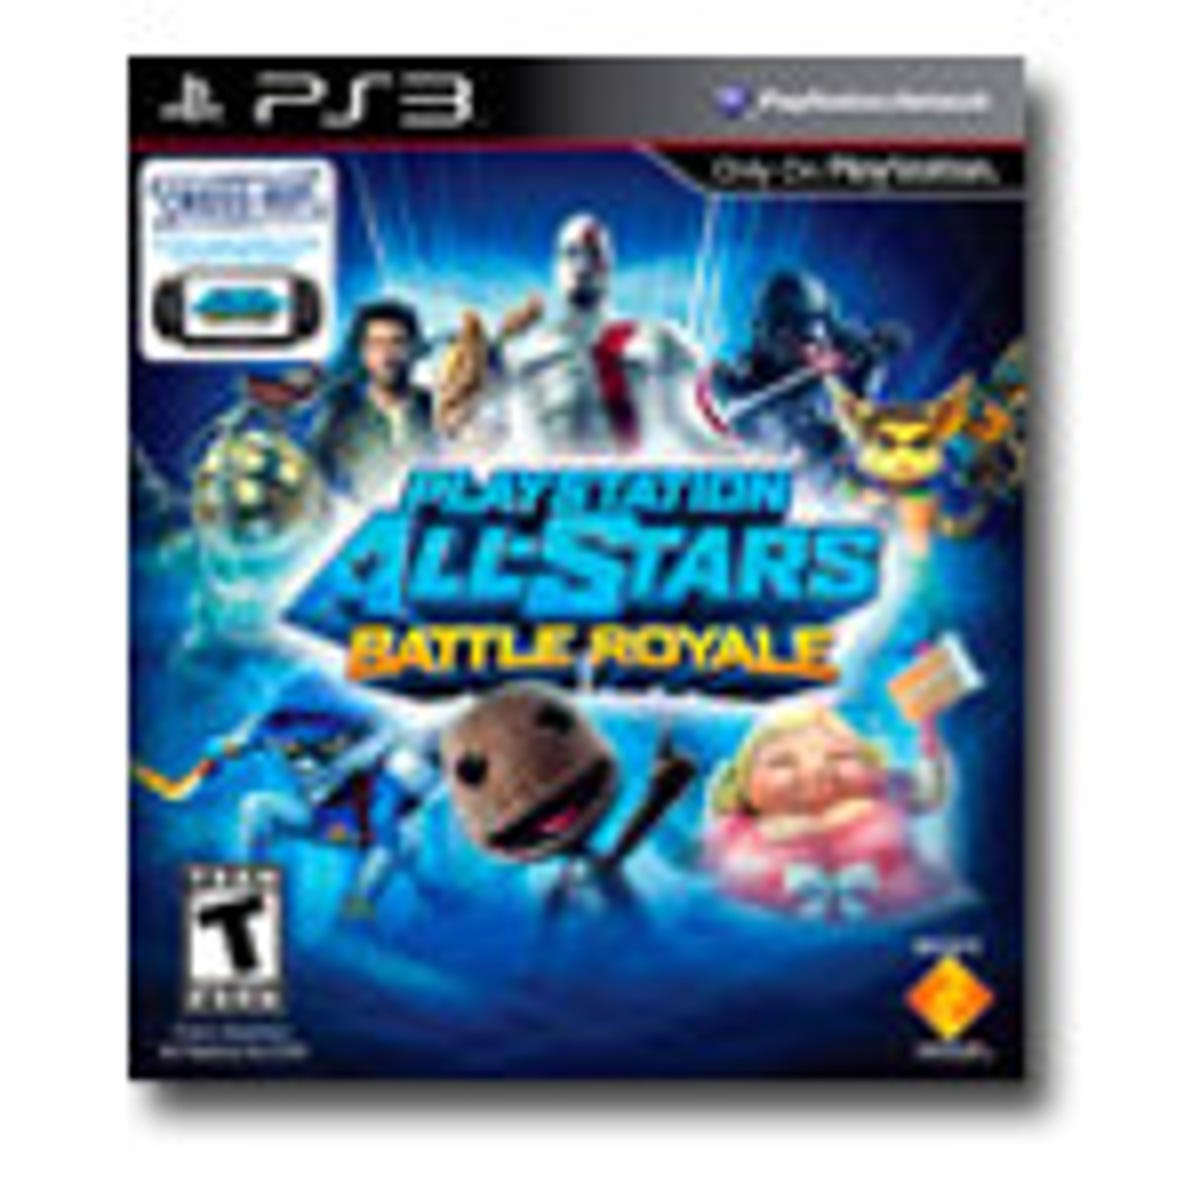 PlayStation All-Stars Battle Royale (PlayStation 3) review: PlayStation  All-Stars Battle Royale (PlayStation 3) - CNET